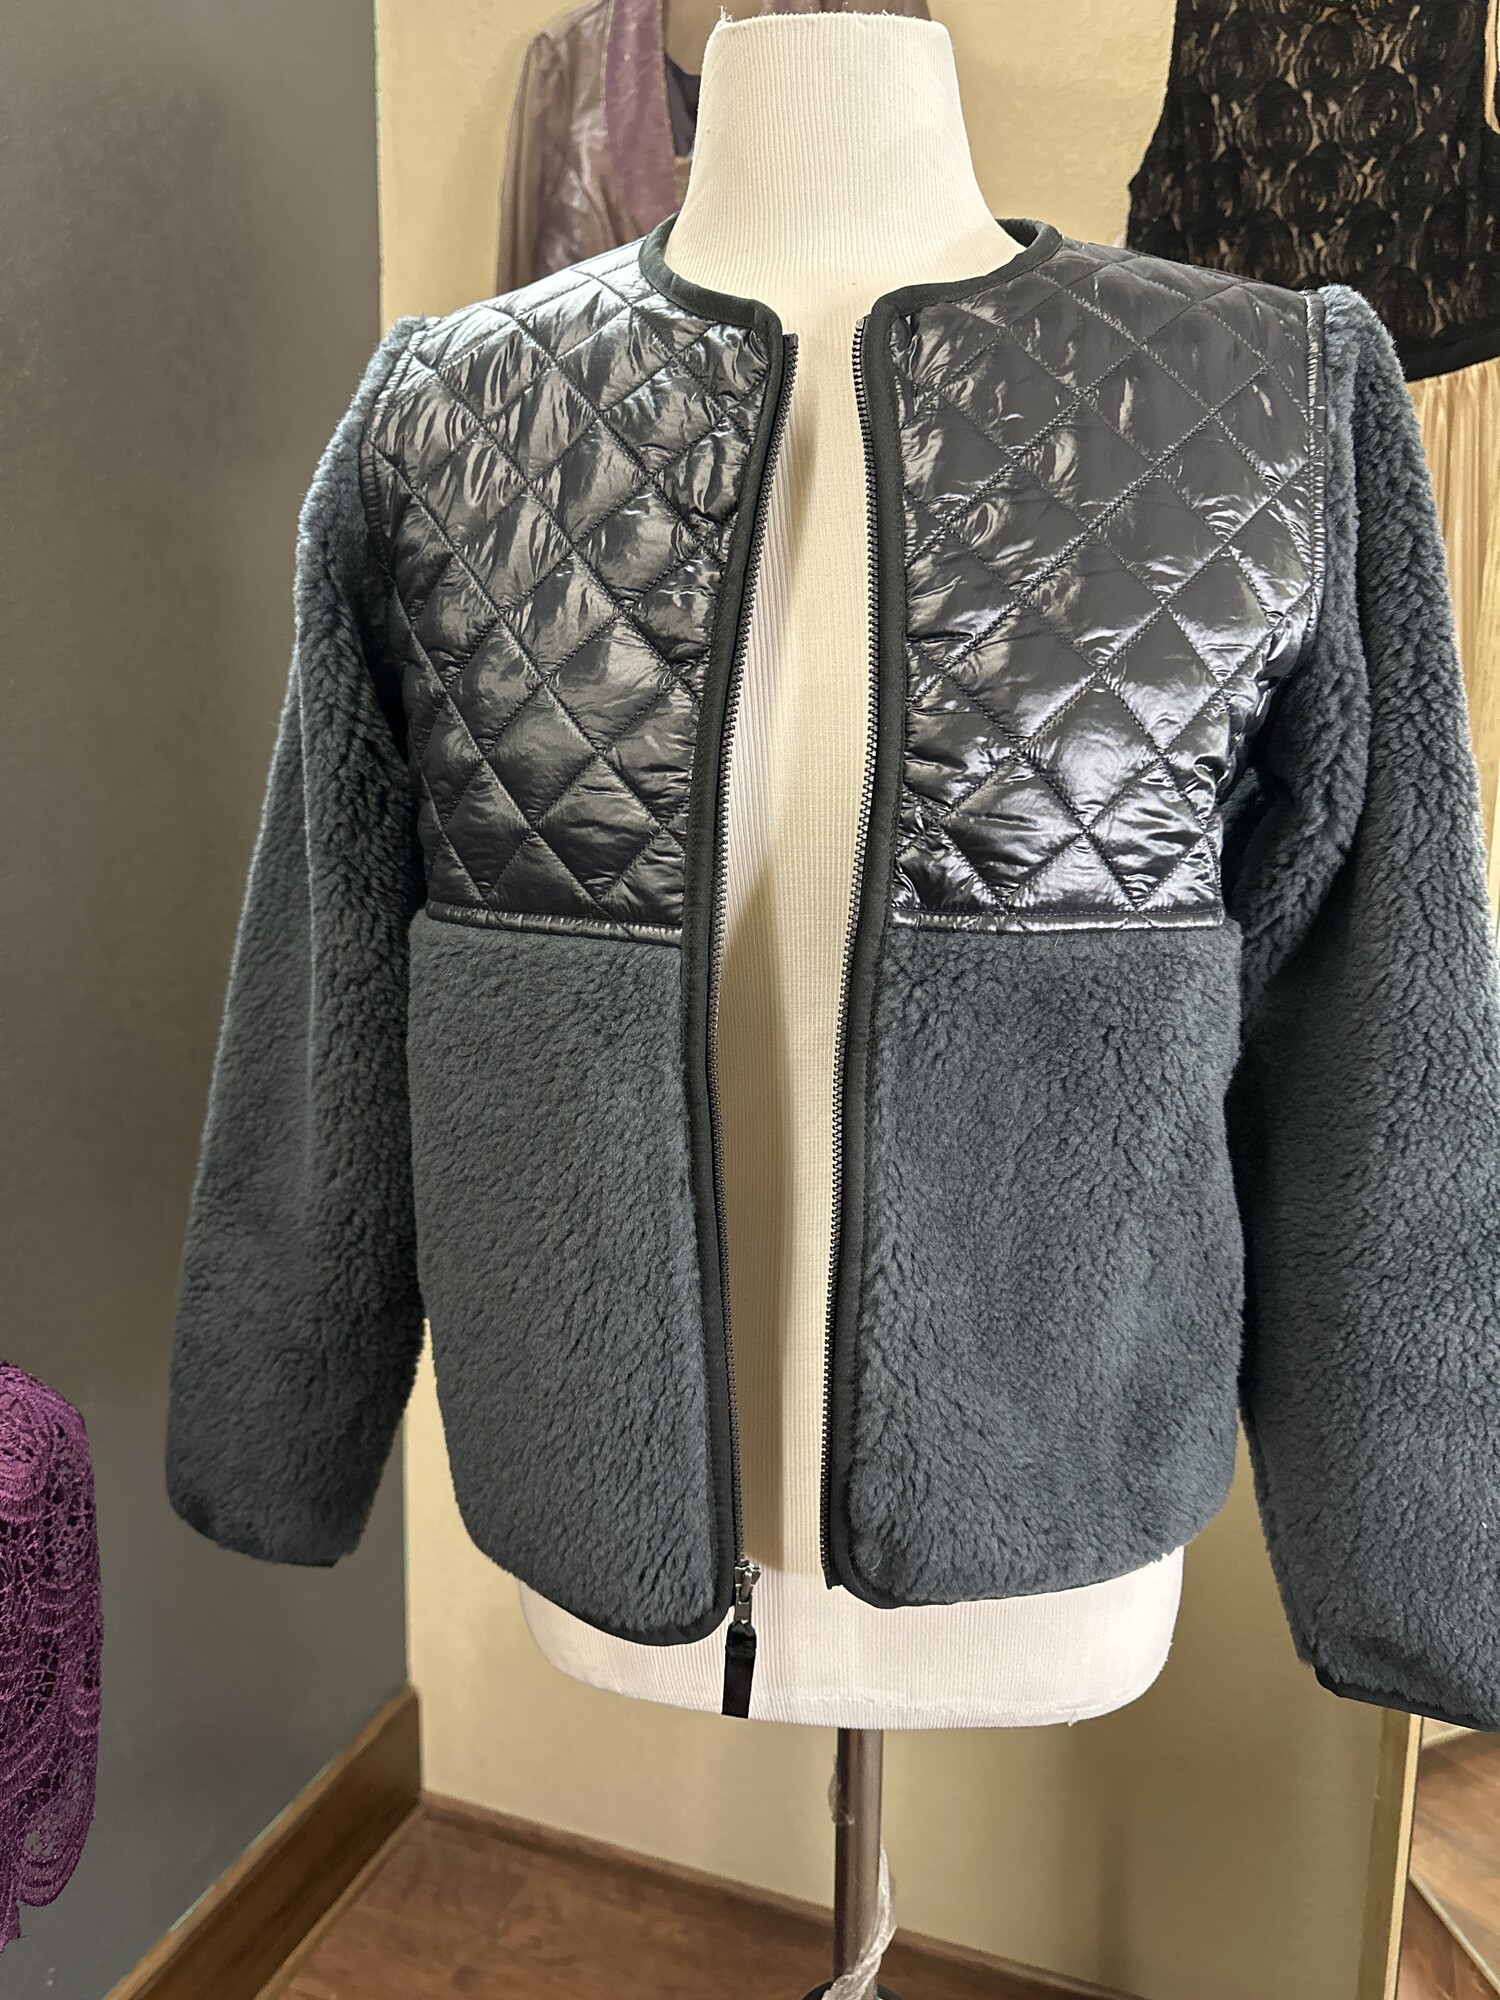 Patagonia Zip Fleece, Black, Size: XS, Stylist addition wardrobe!  Get it while we still have it.